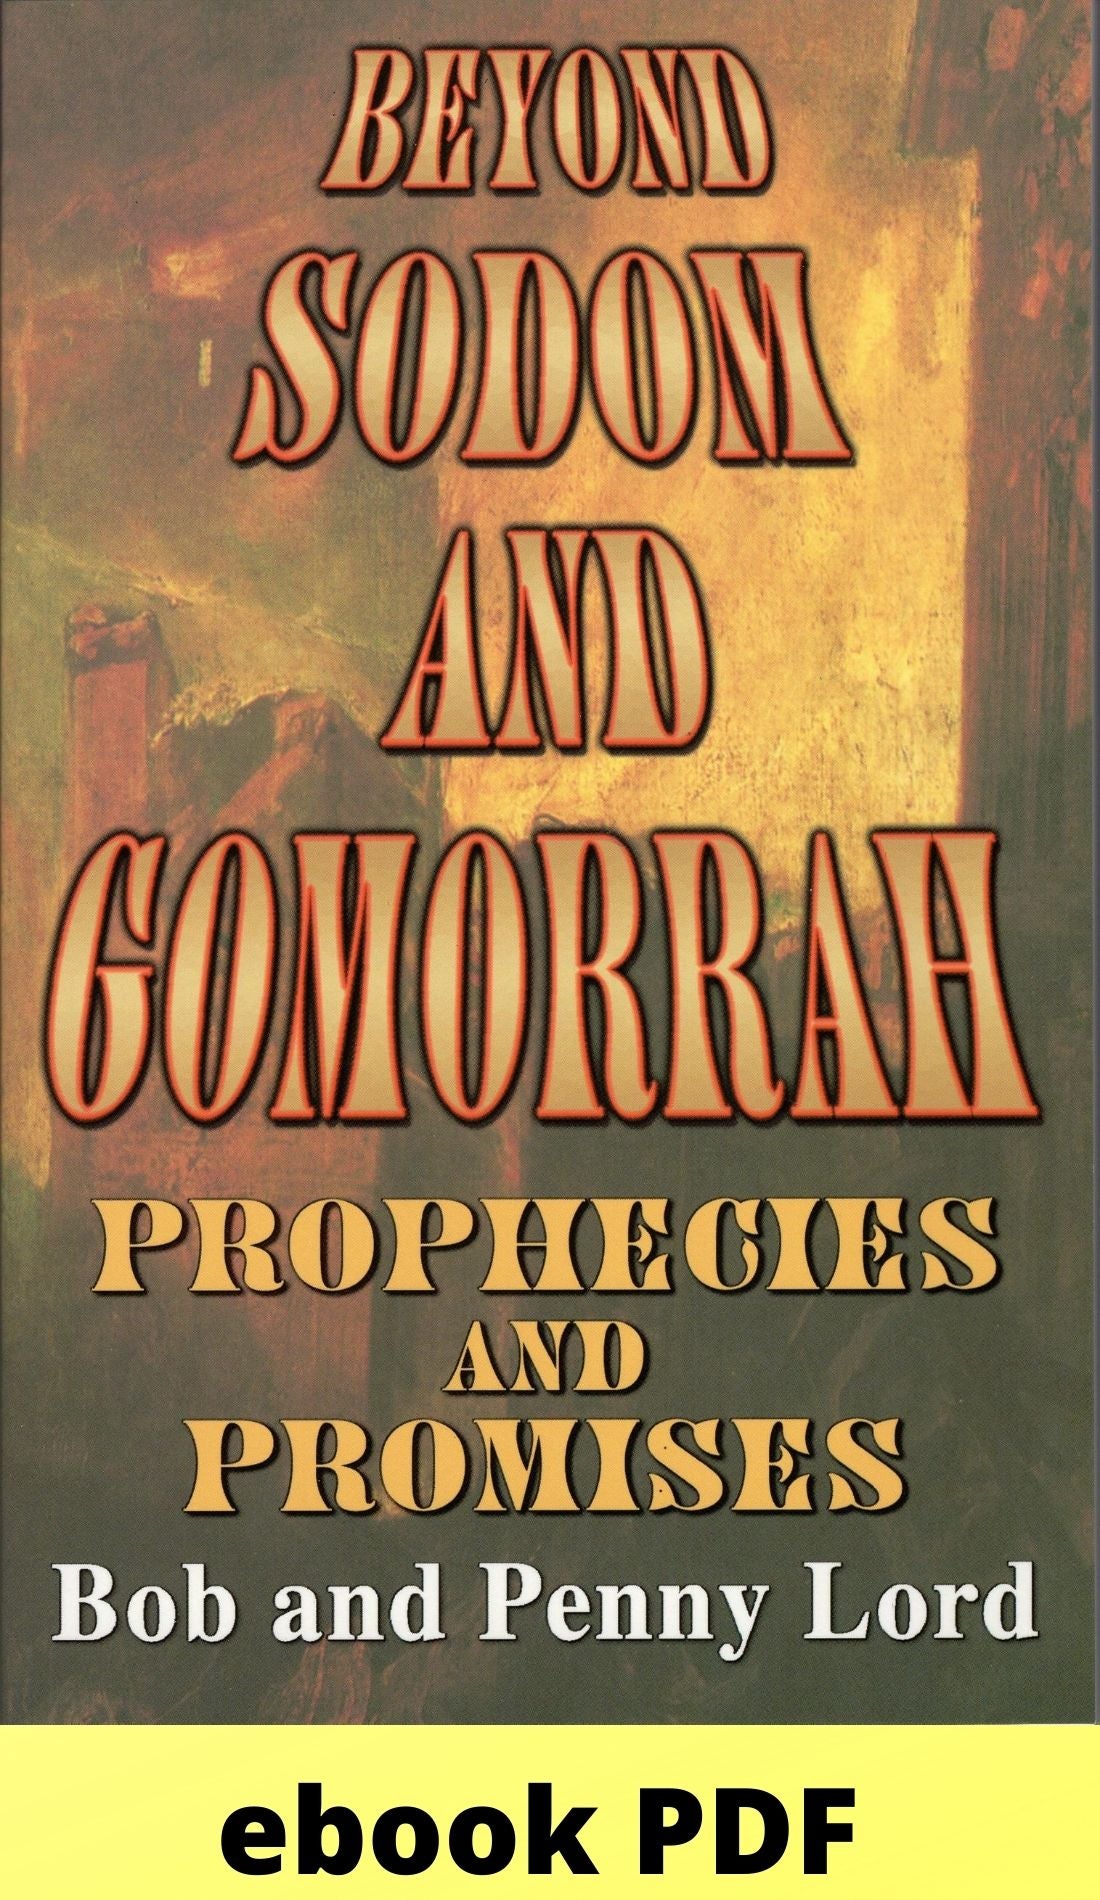 Beyond Sodom and Gomorrah ebook  PDF - Bob and Penny Lord